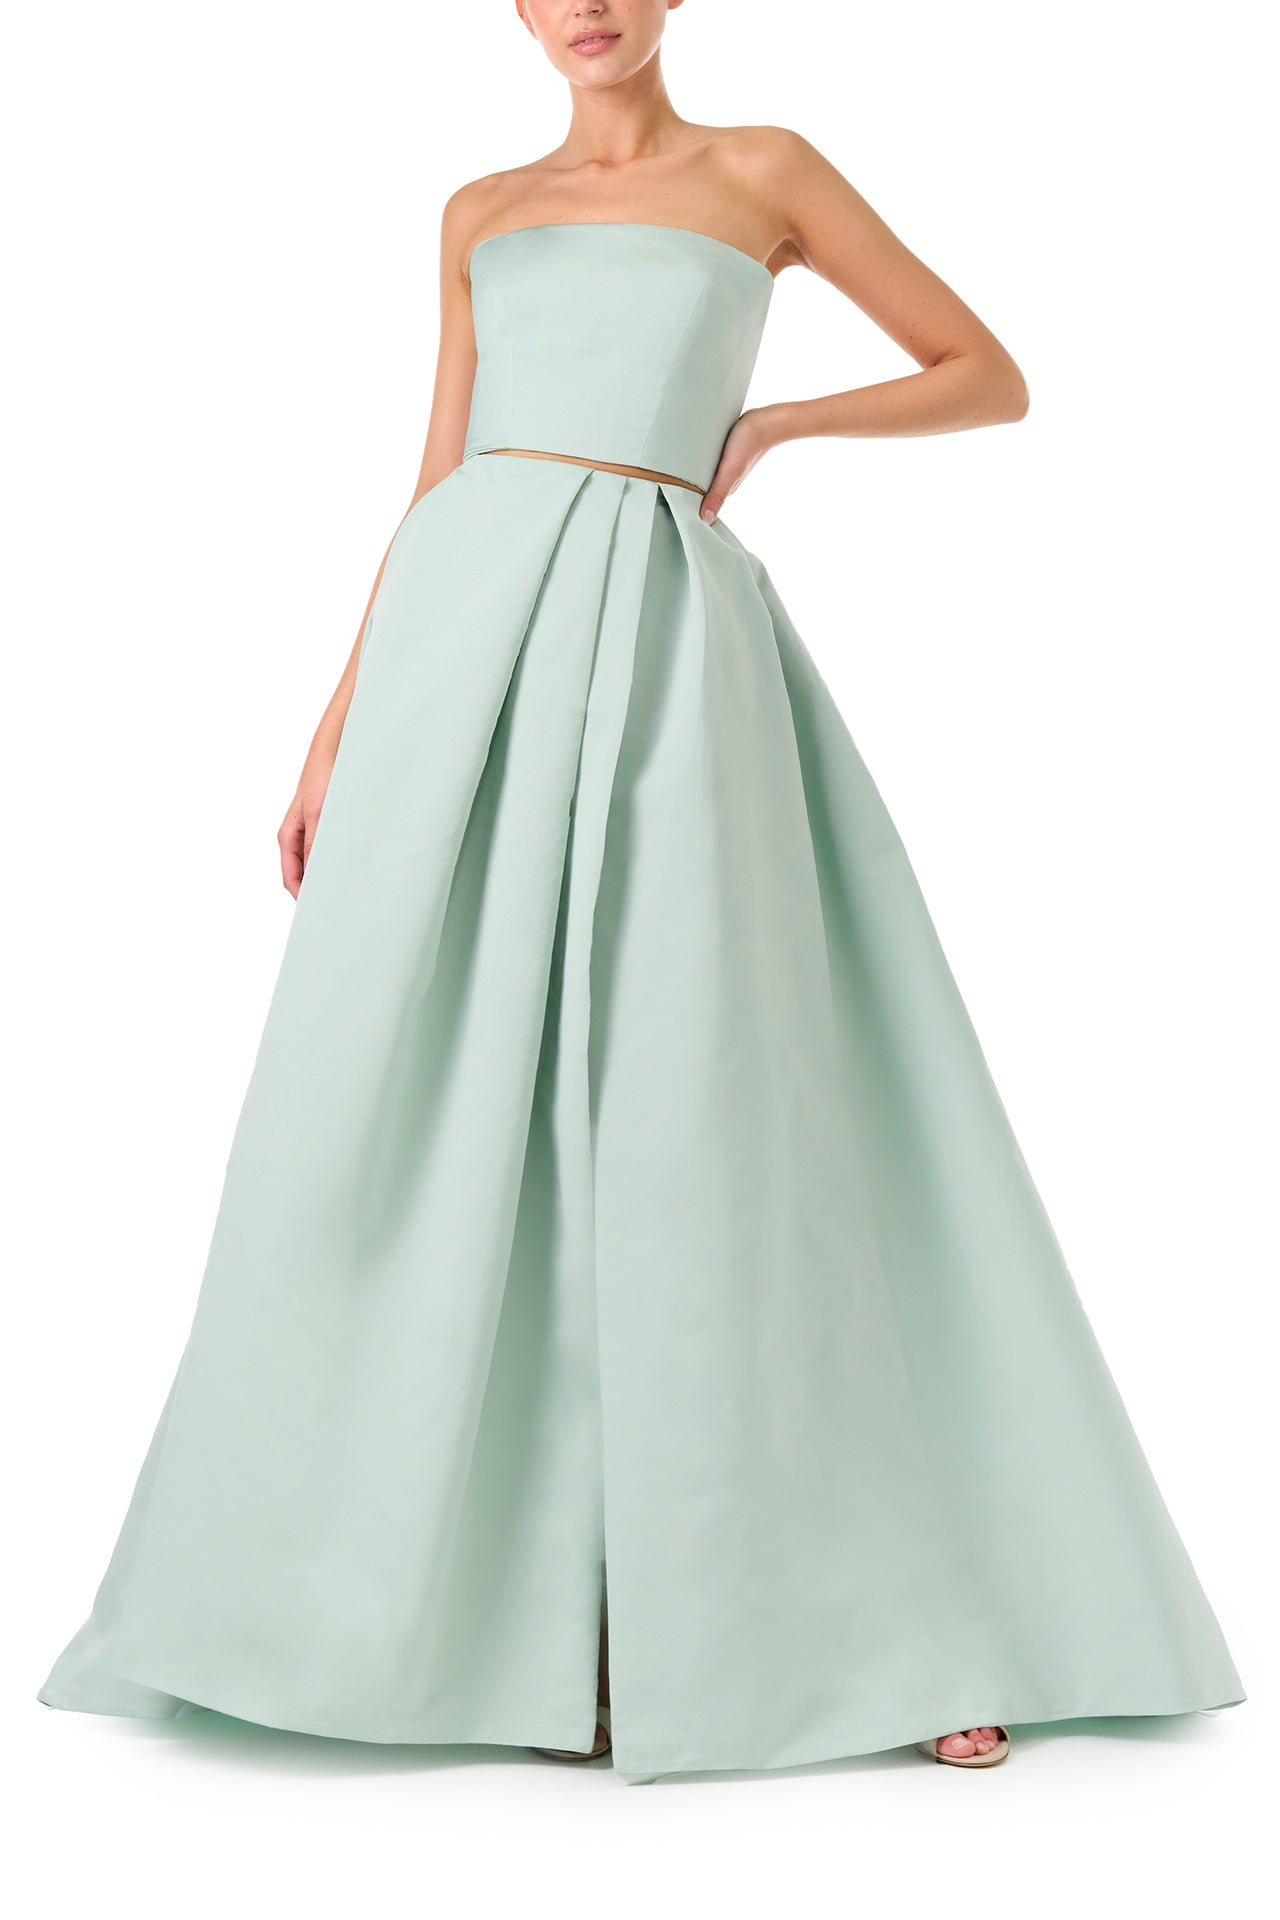 Buy Green Dresses for Women by AARA Online | Ajio.com